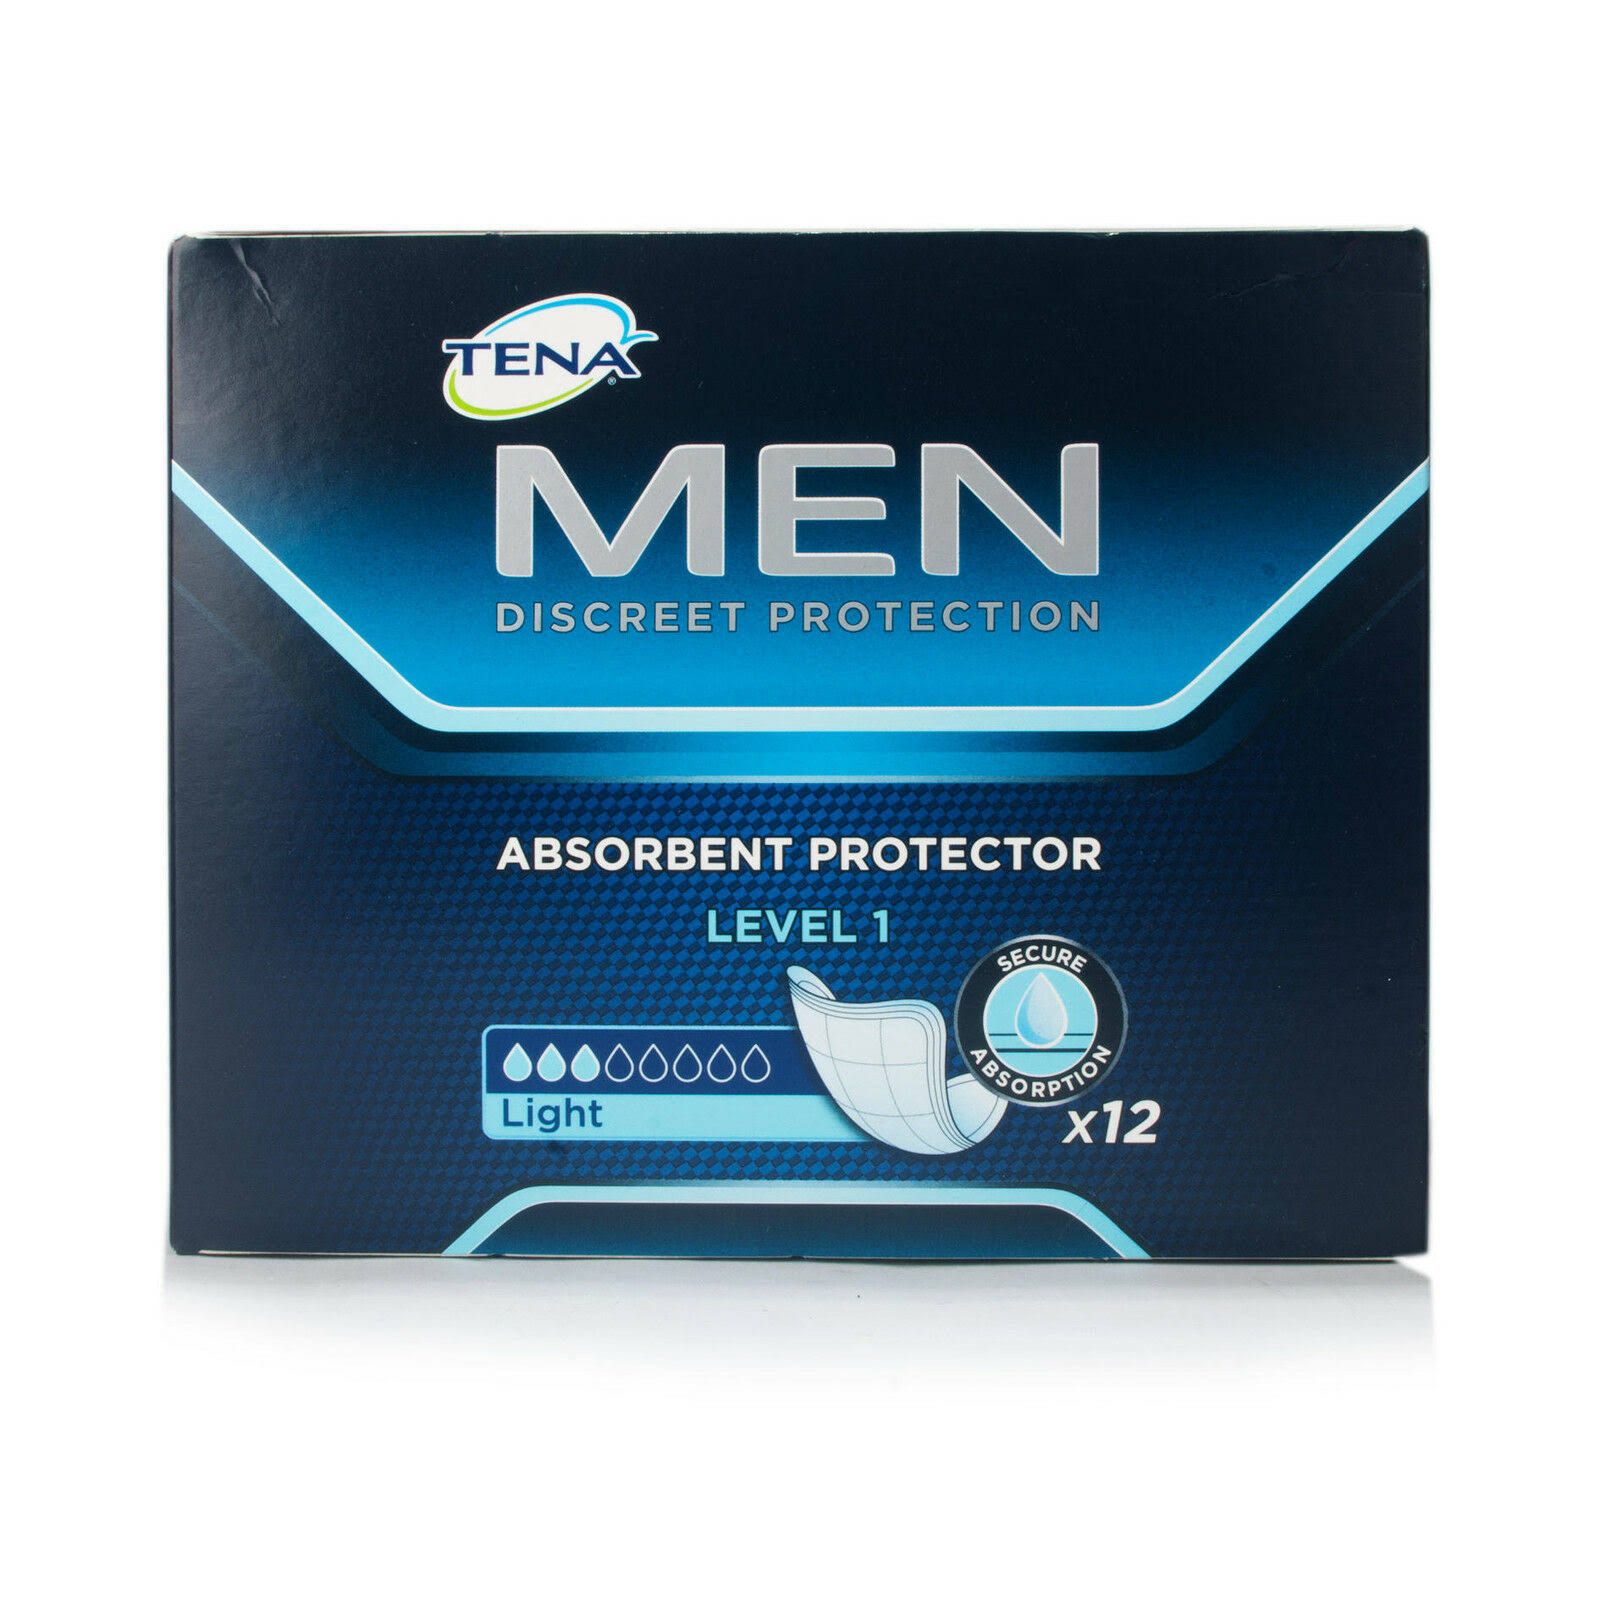 TENA Men Absorbent Protector - Level 1, 12 Pads